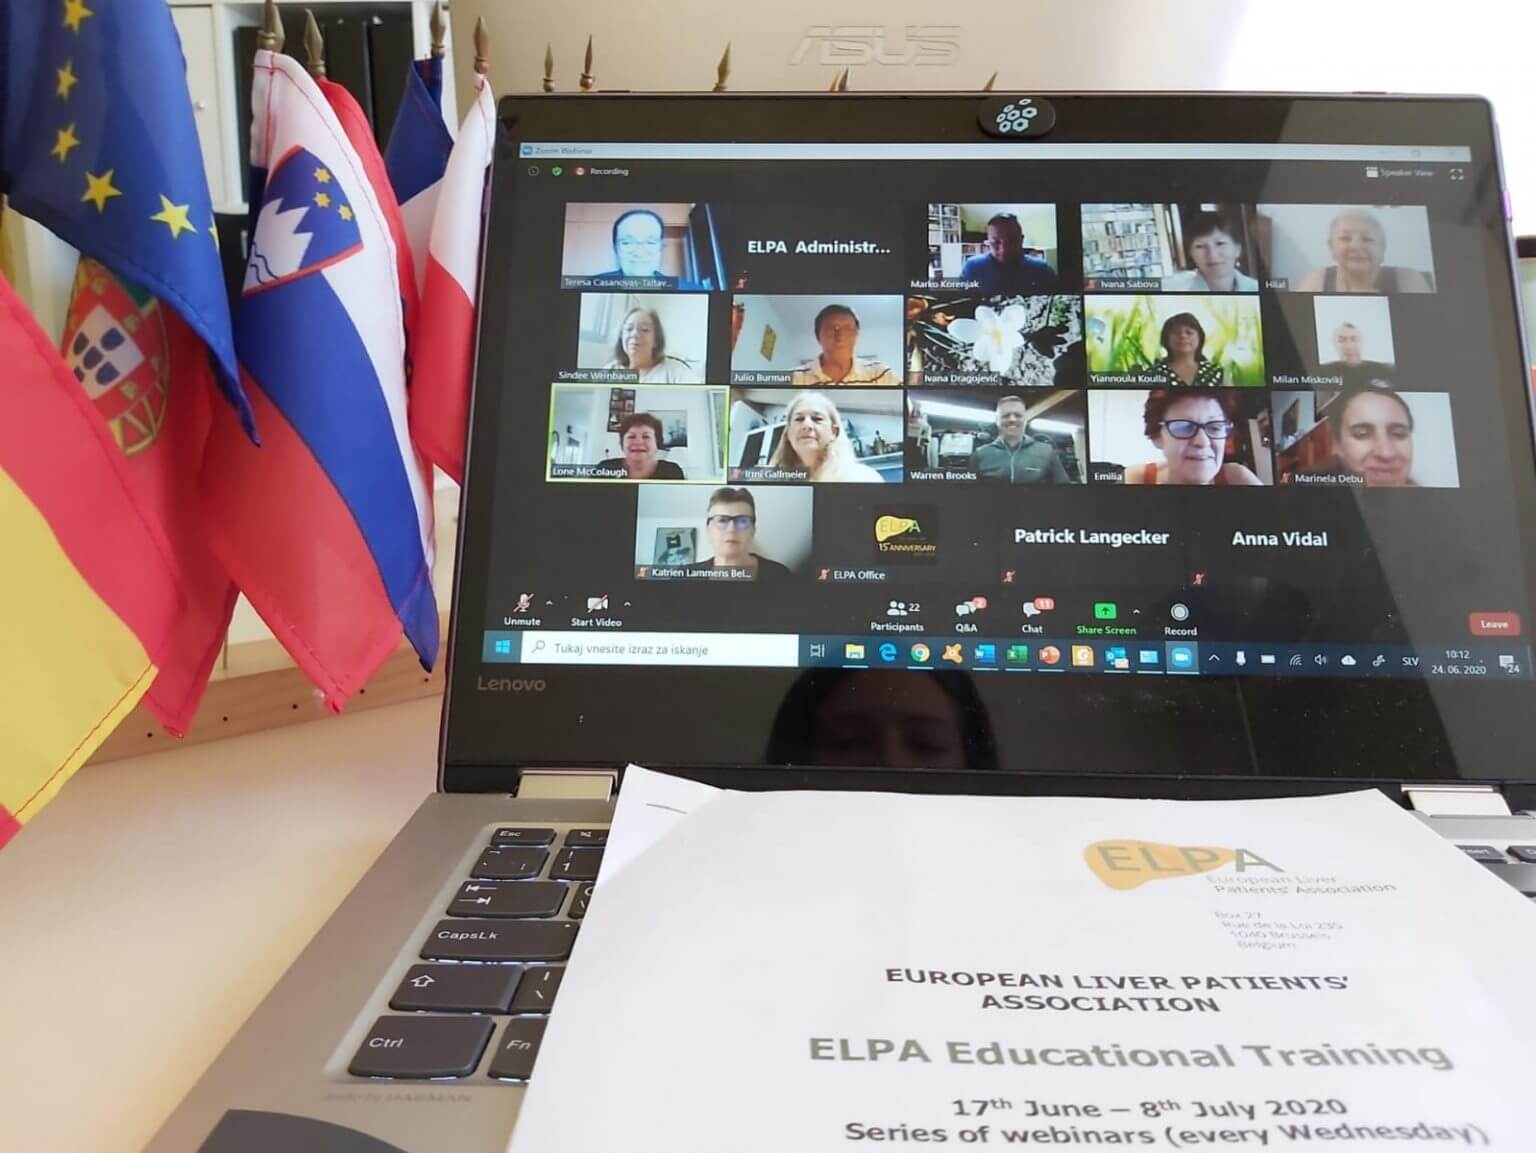 ELPA Educational Training – DAY TWO, 24th June 2020